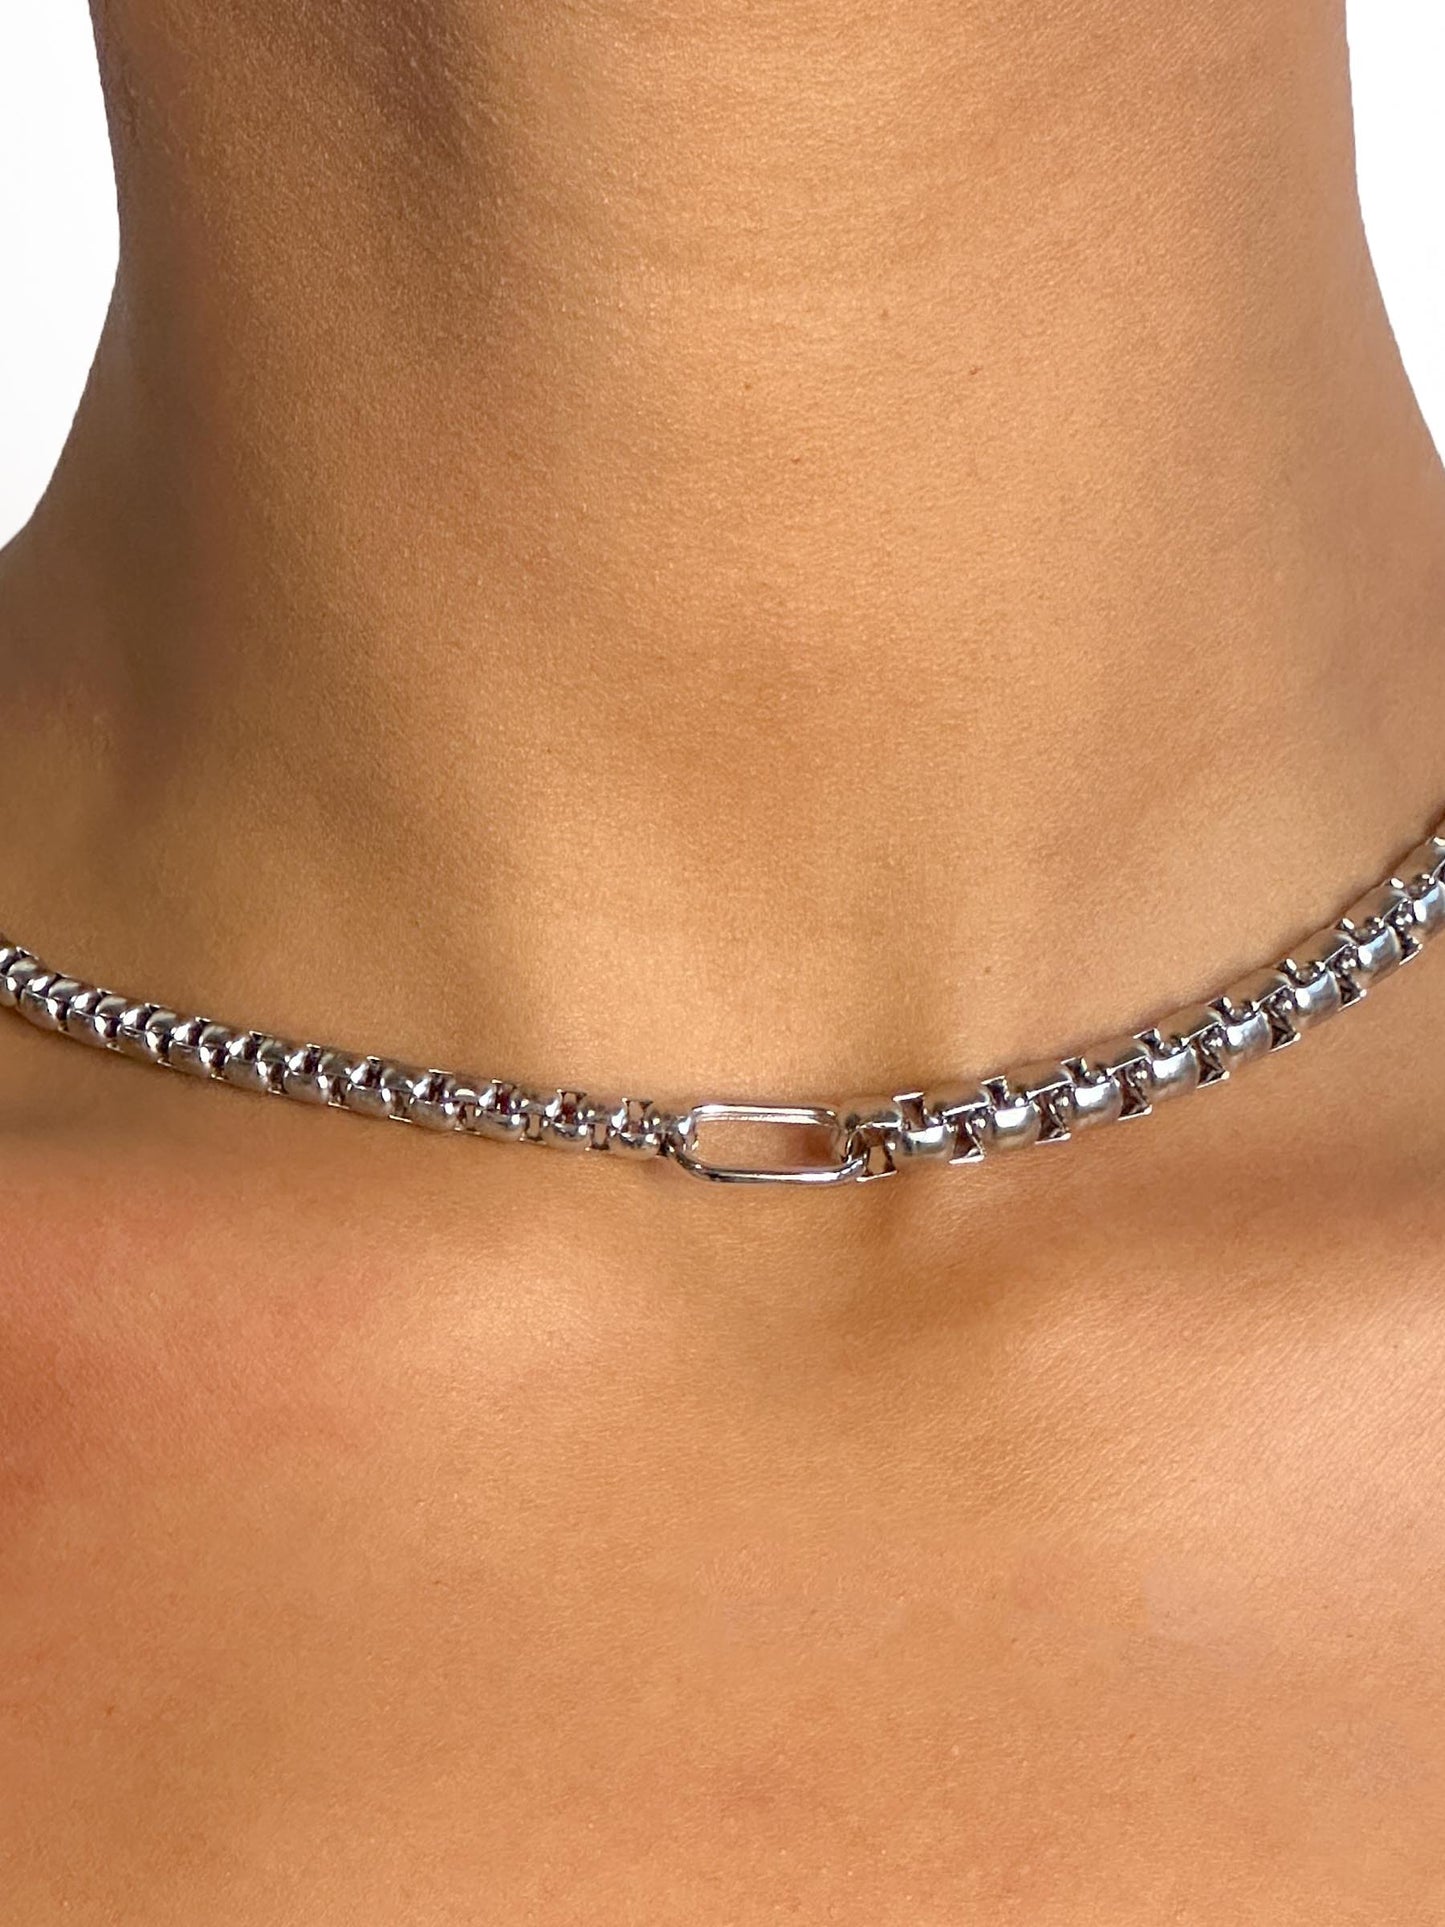 Wren silver chain